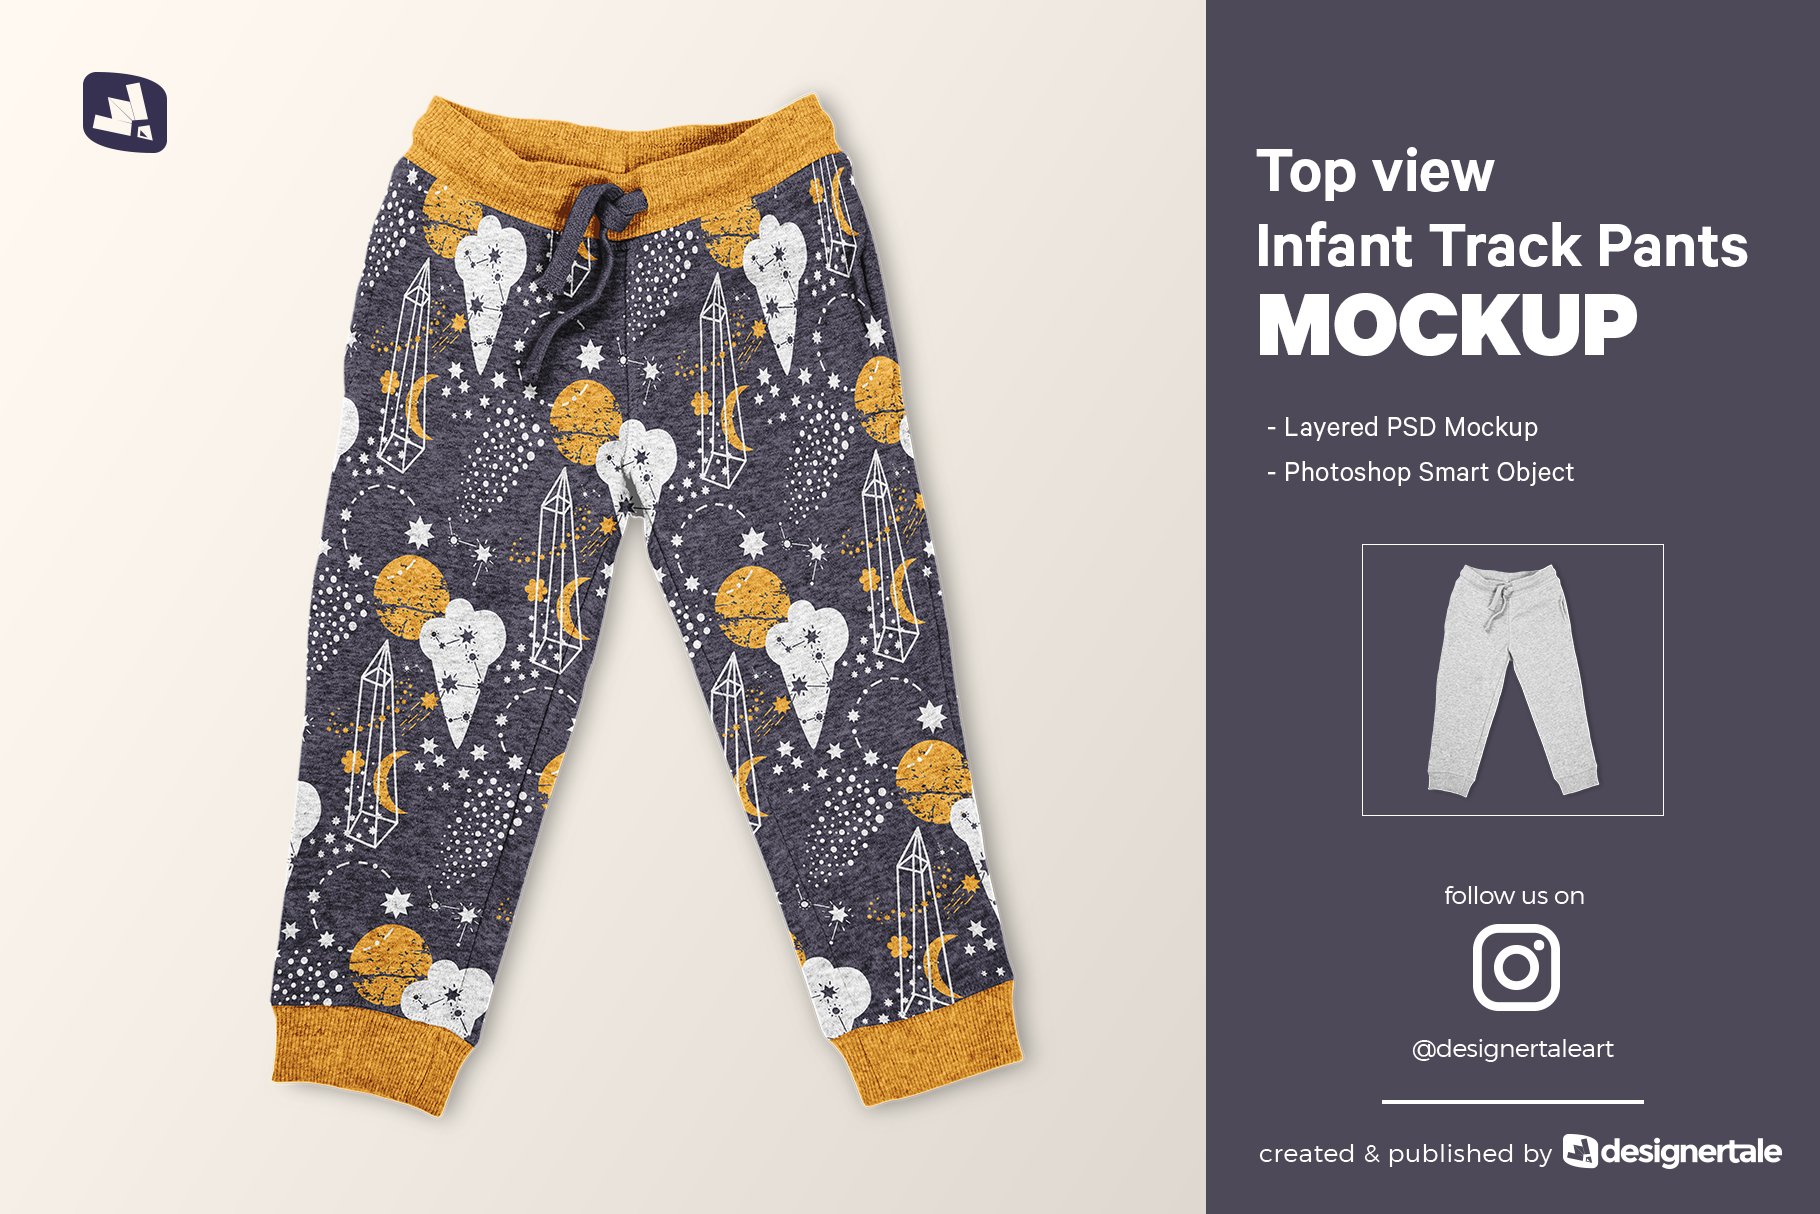 Top View Infant Track Pants Mockup